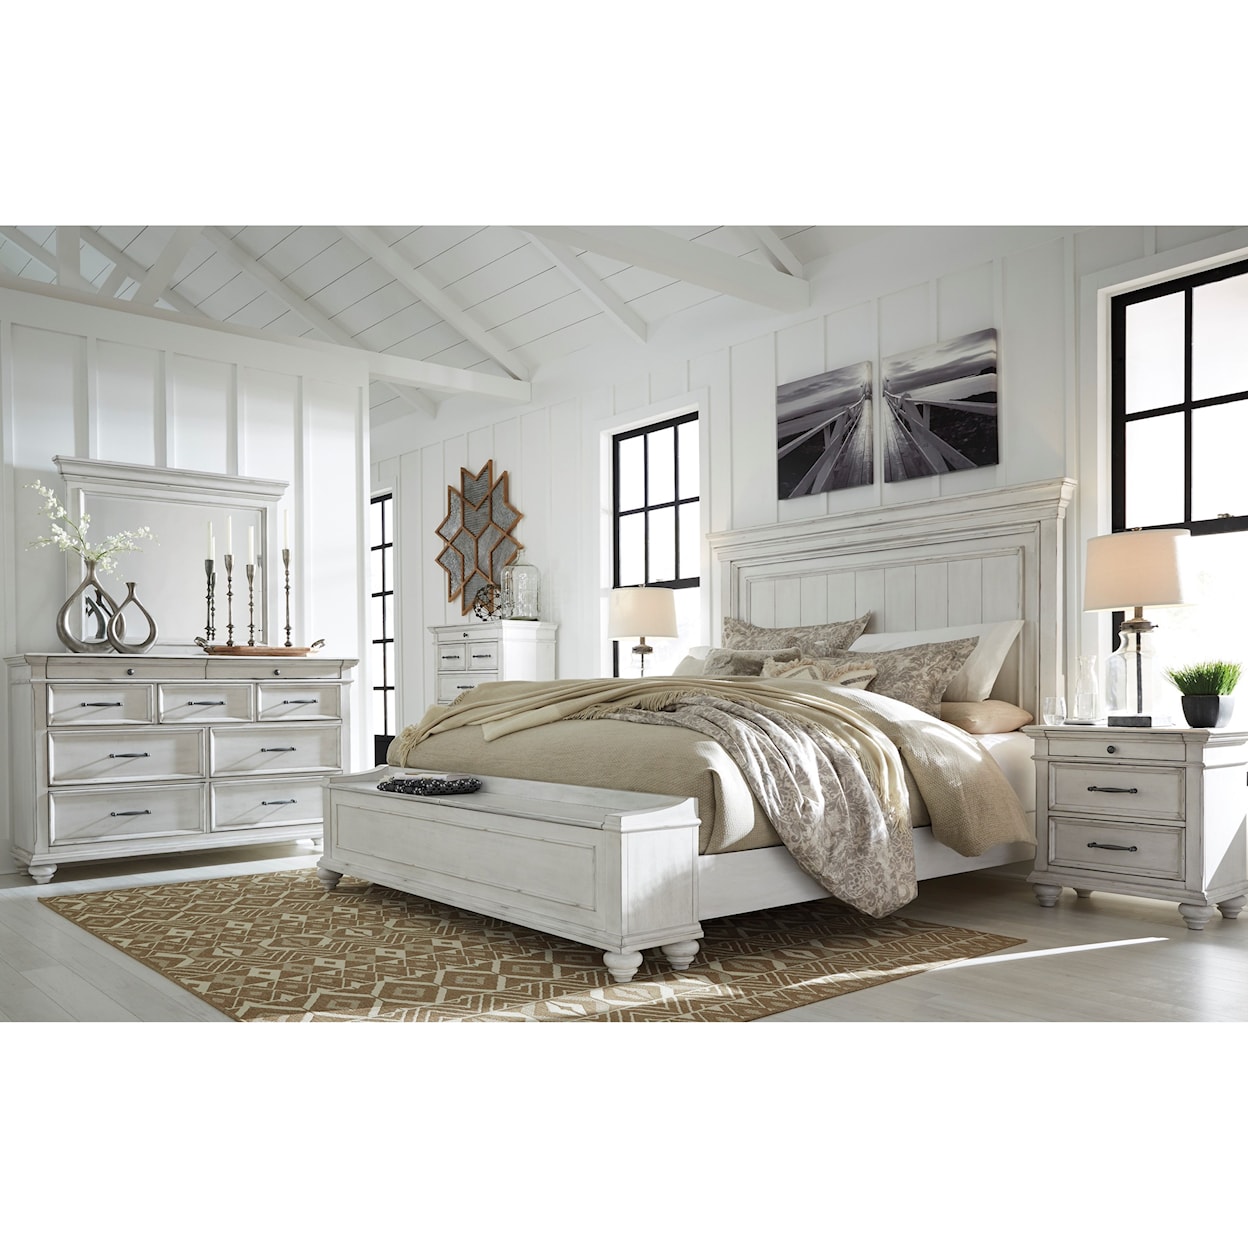 Ashley Furniture Benchcraft Kanwyn California King Bedroom Group